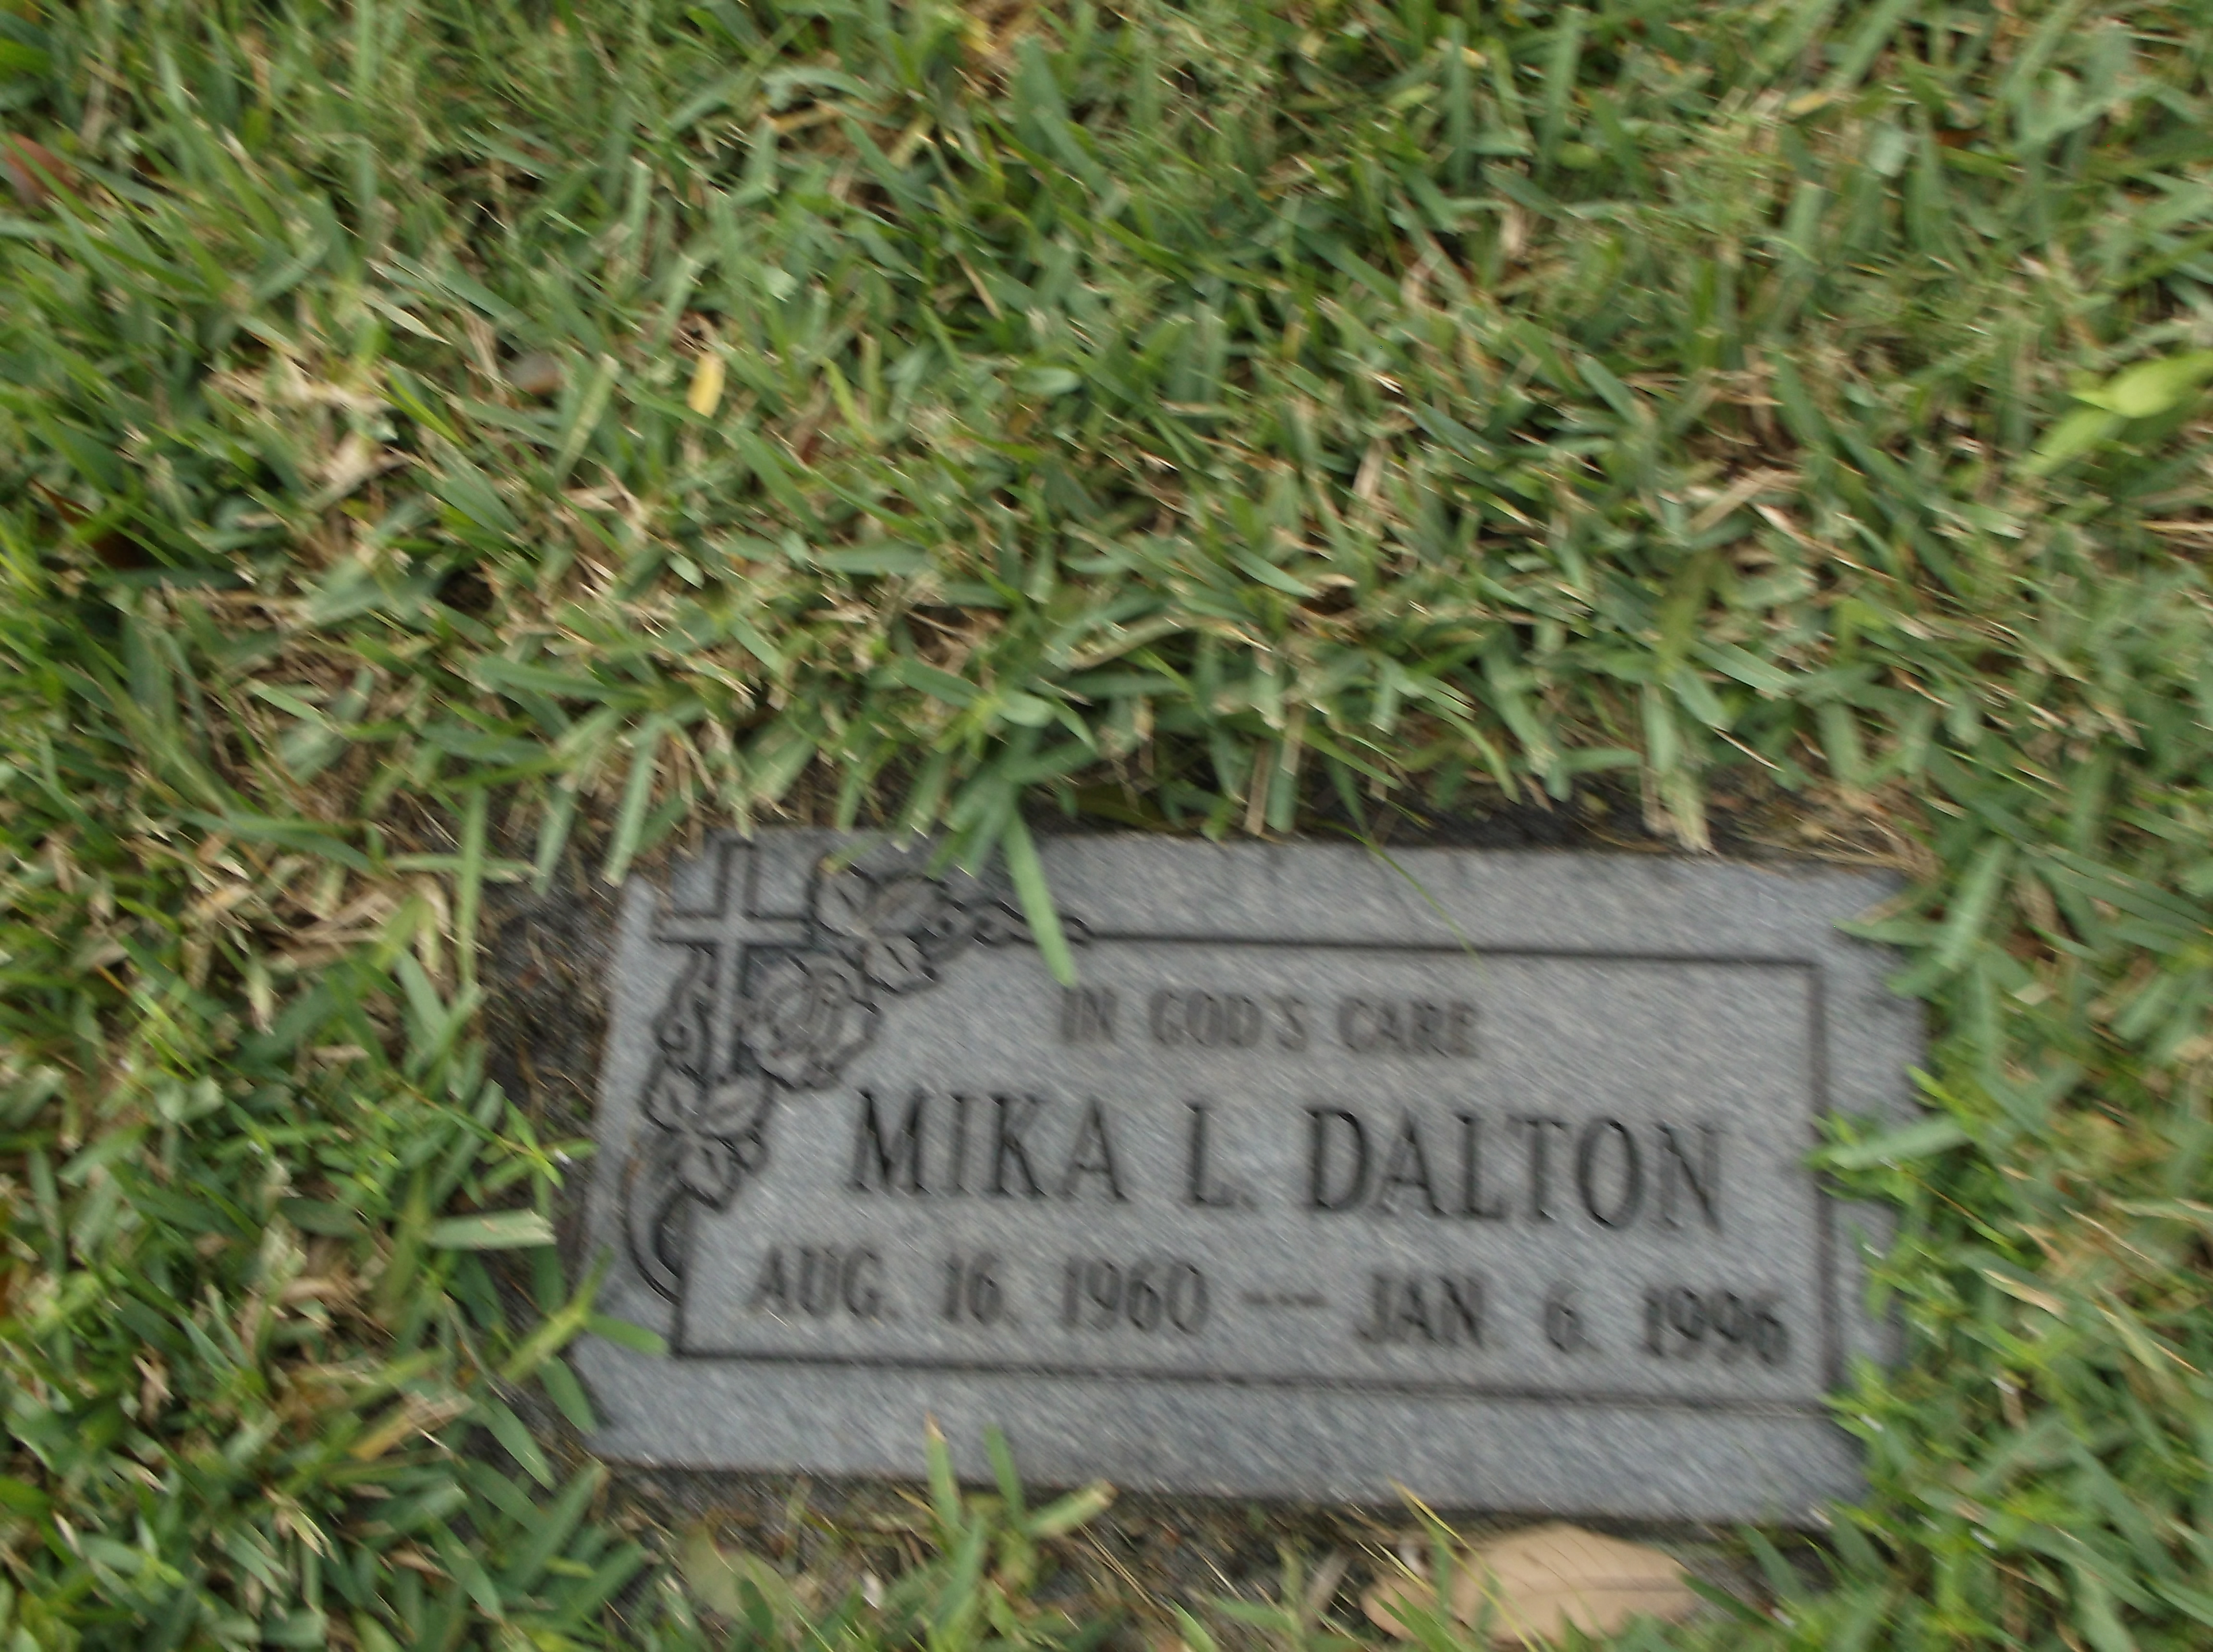 Mika L Dalton